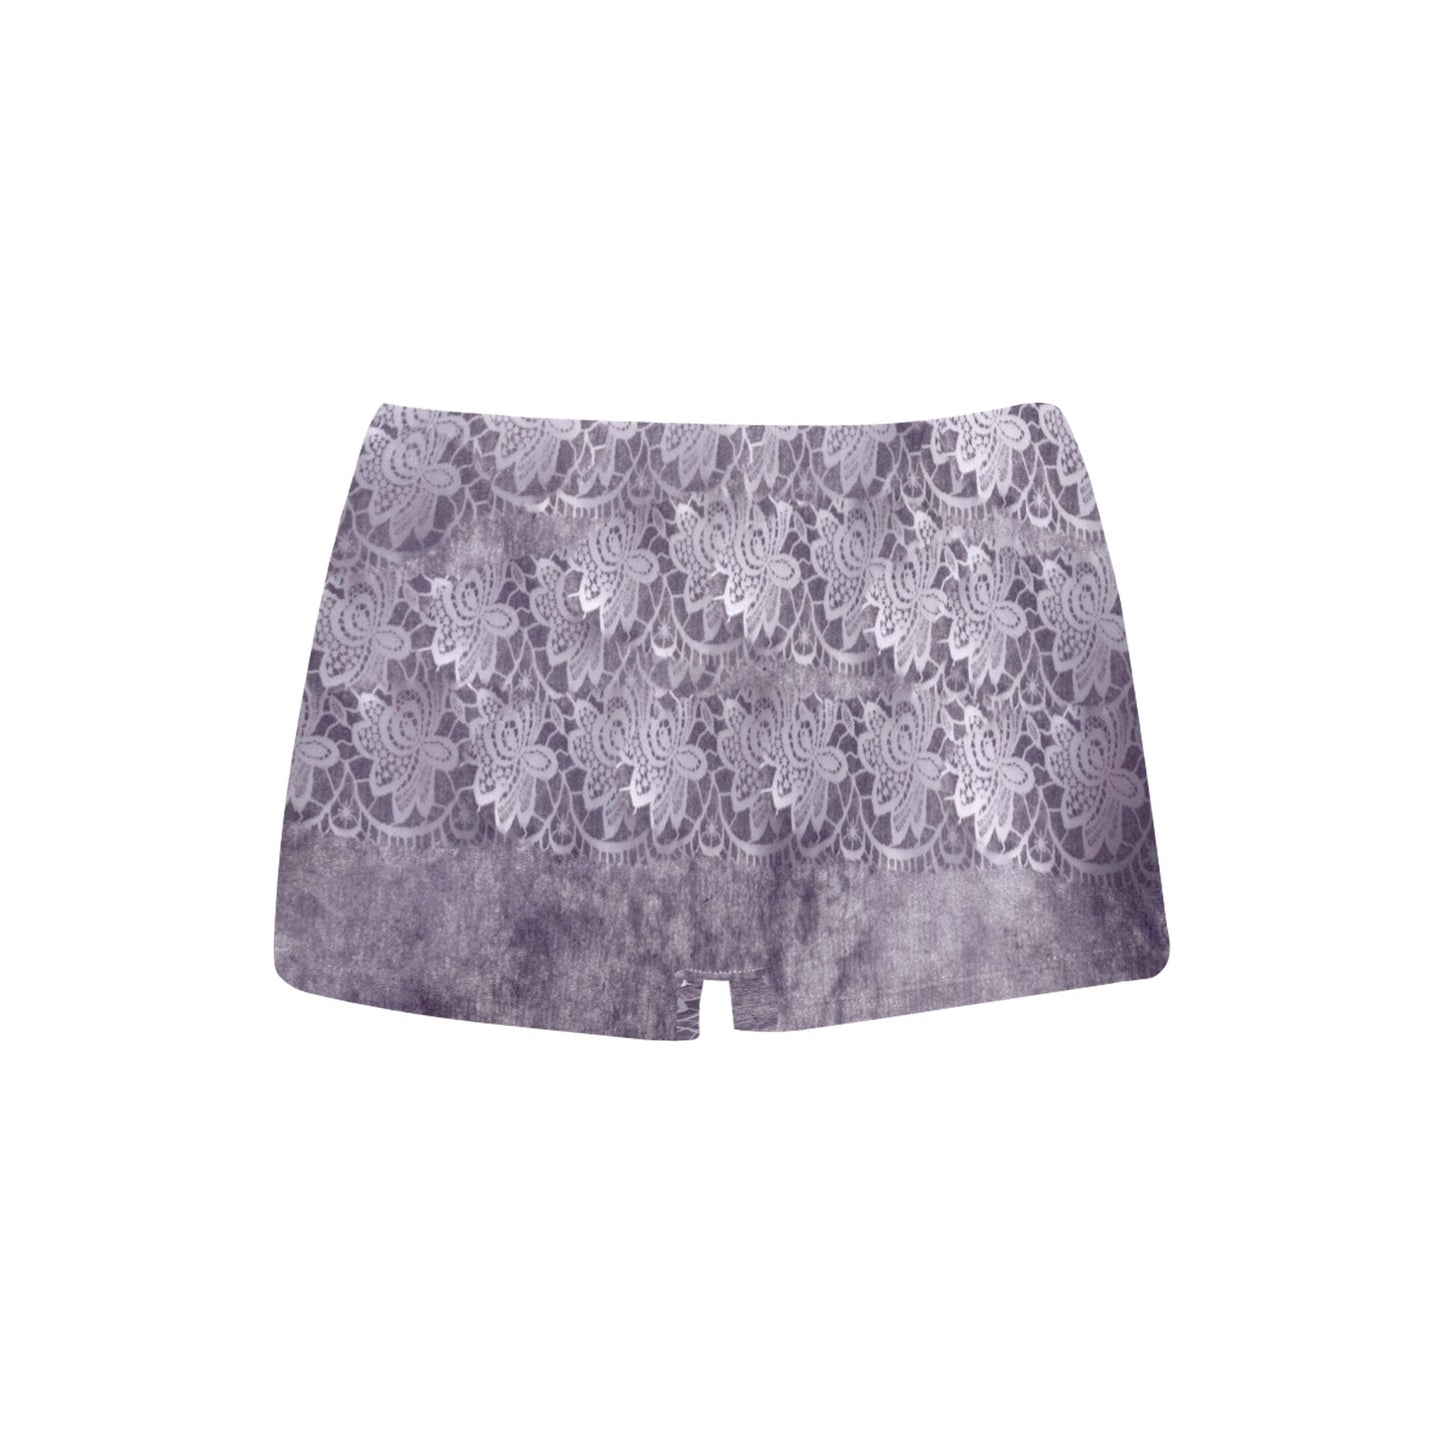 Printed Lace Boyshorts, daisy dukes, pum pum shorts, shortie shorts , design 39